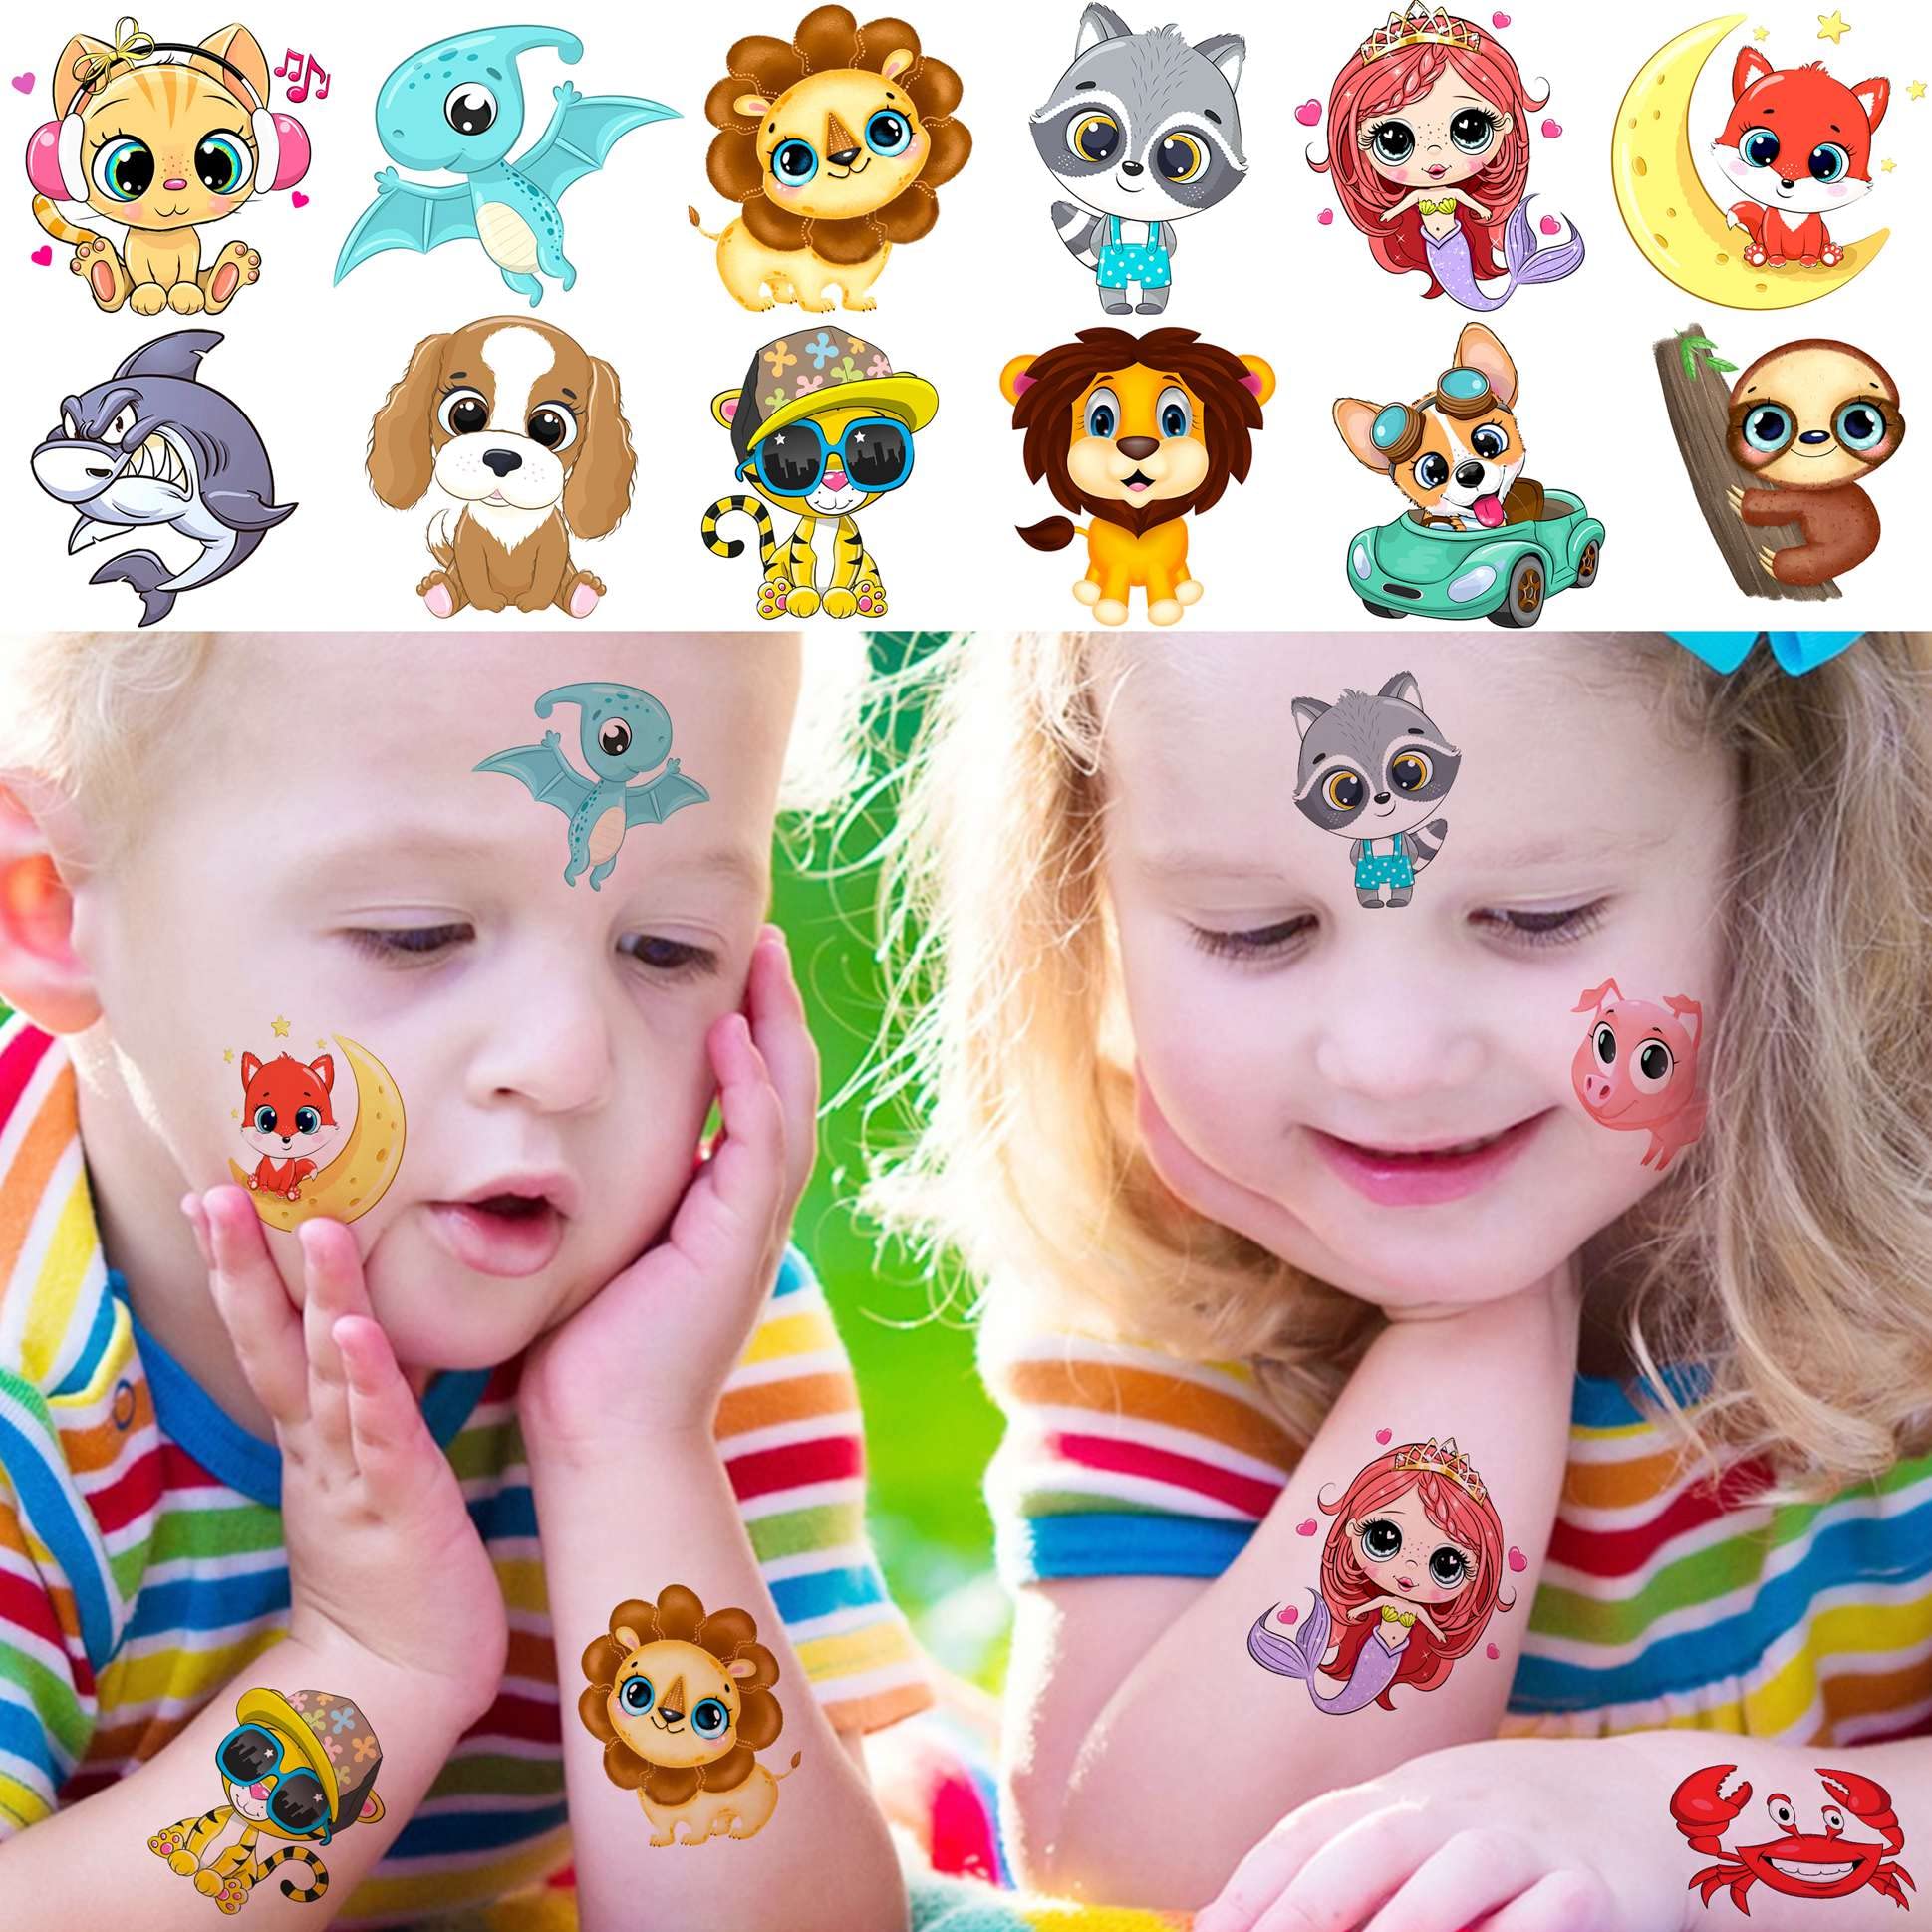 Yezunir 50 PCS 3D Cute Animals Temporary Tattoos For Kids Girls Boys, Cartoon Animals Lion Dog Cat ZOO Fake Tattoo Sticker Children Toddler Birthday Gifts, Teens Tatoos Party Favors Sets Supplies